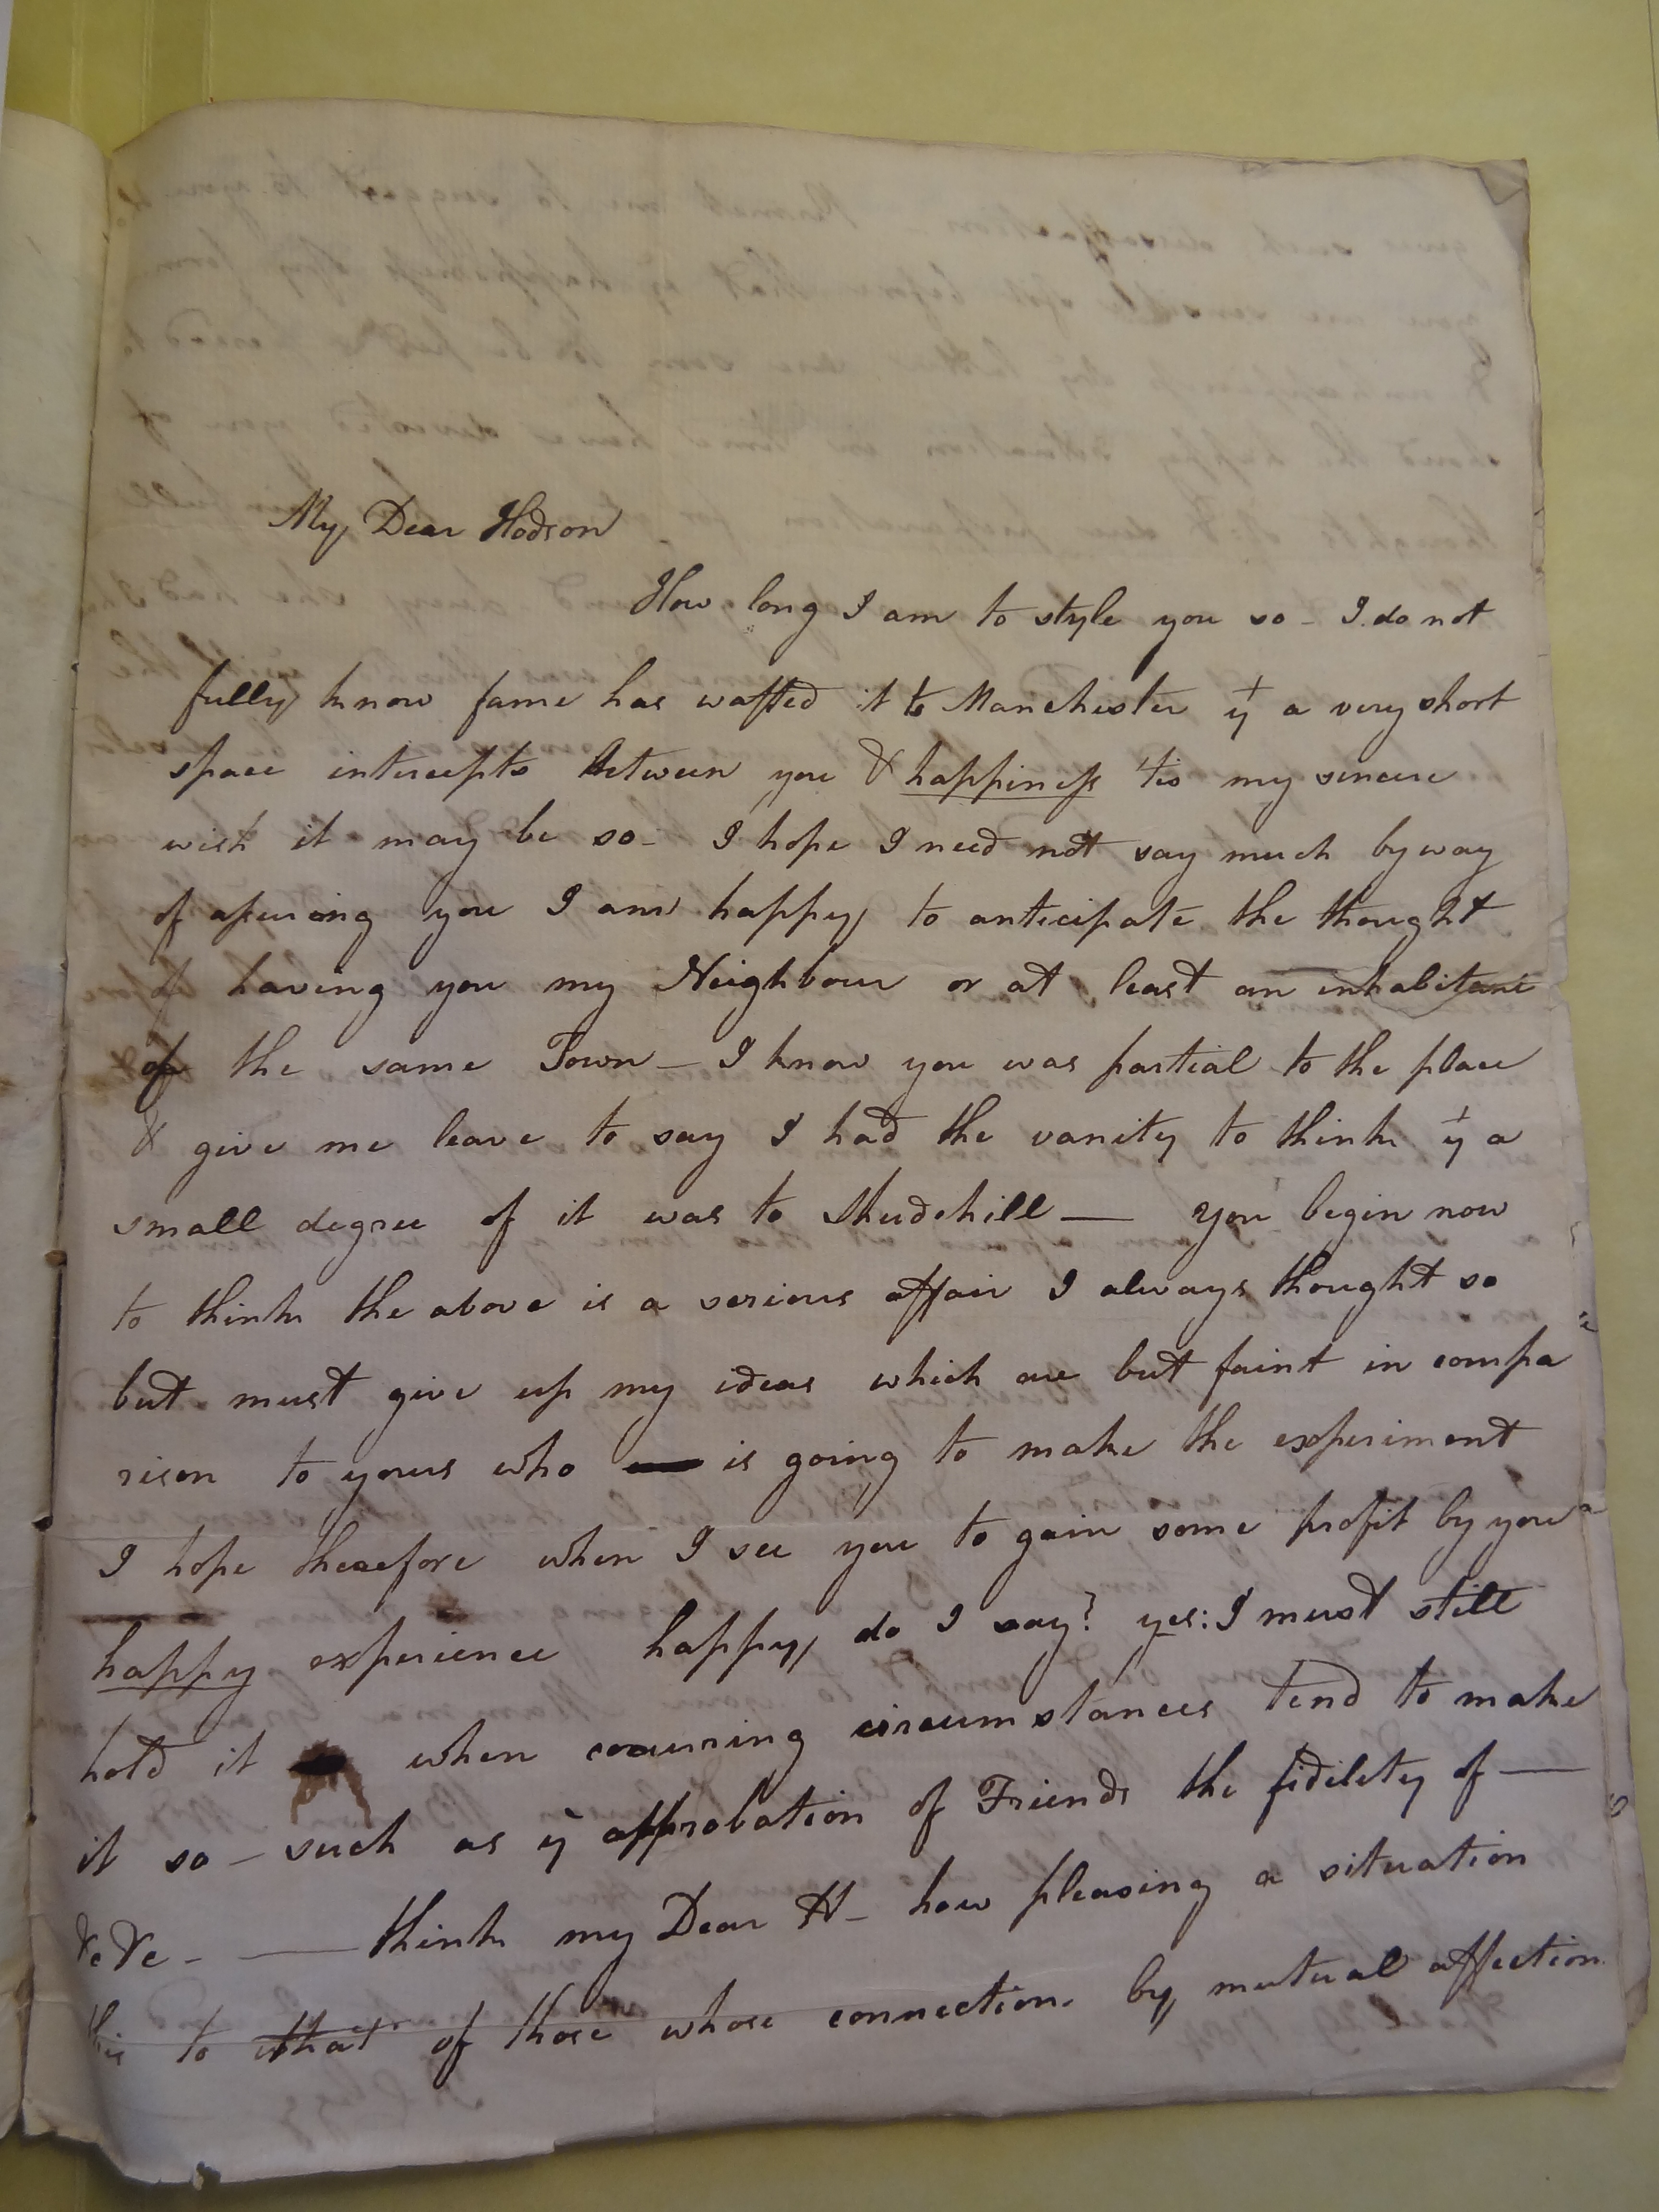 Image #1 of letter: Rebekah Bateman to Mary Jane Hodson, 29 April 1784